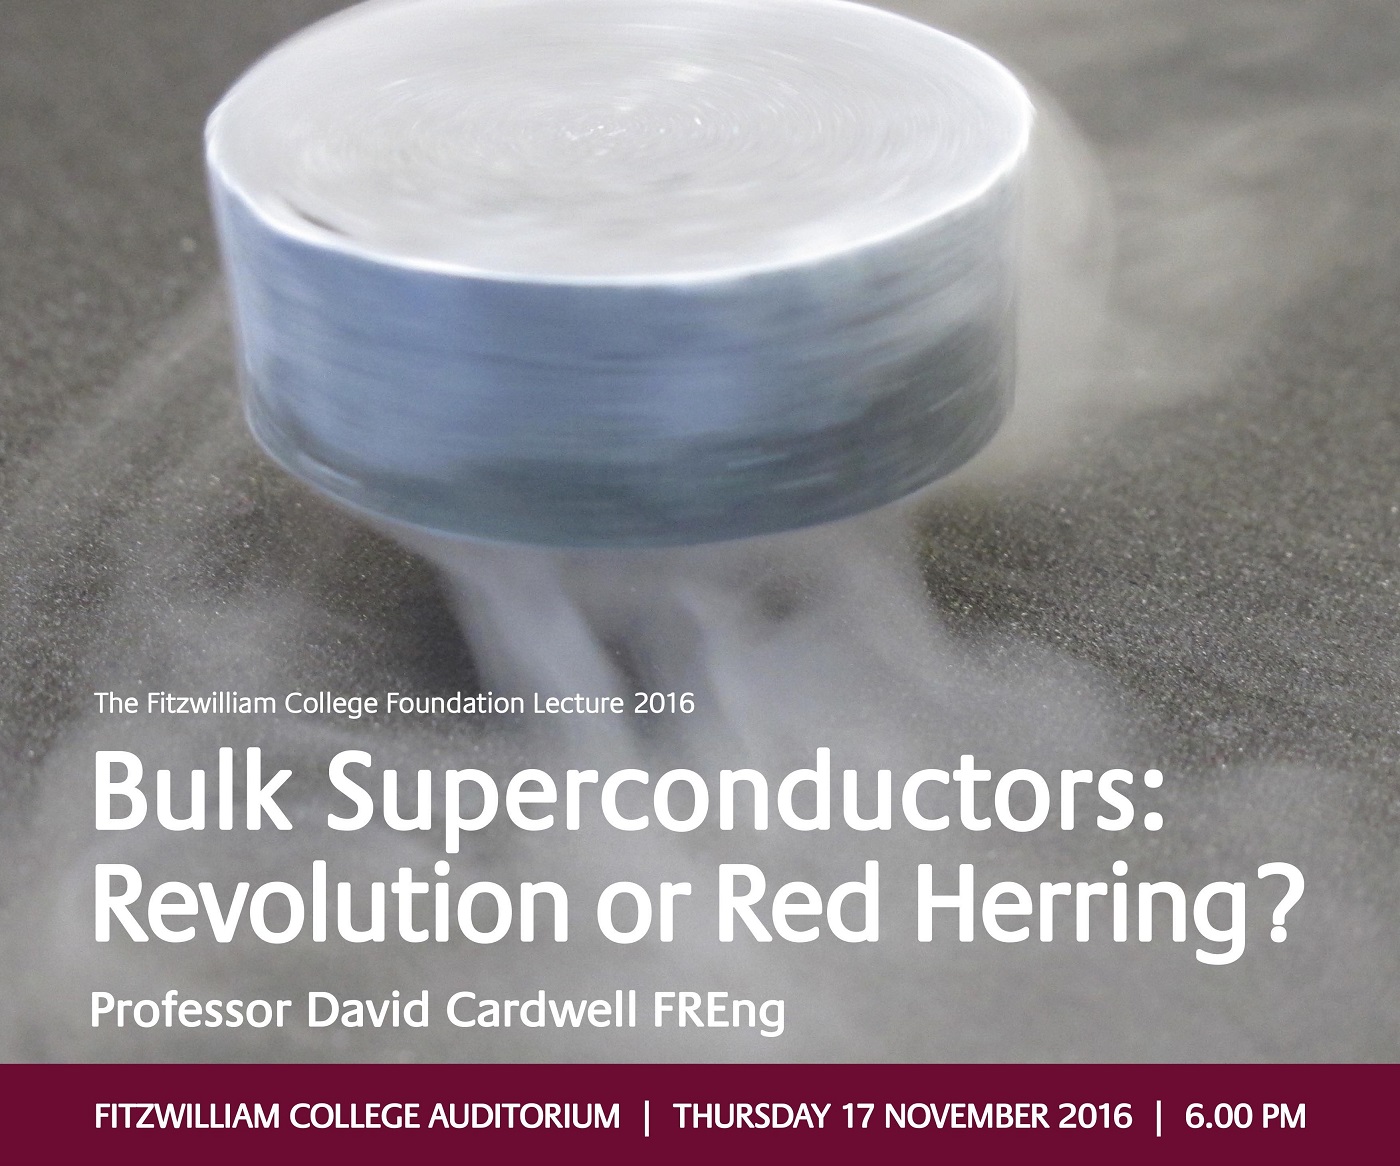 Fitzwilliam College Foundation Lecture 2016 - Professor David Cardwell - Bulk Superconductors: Revolution or Red Herring?'s image